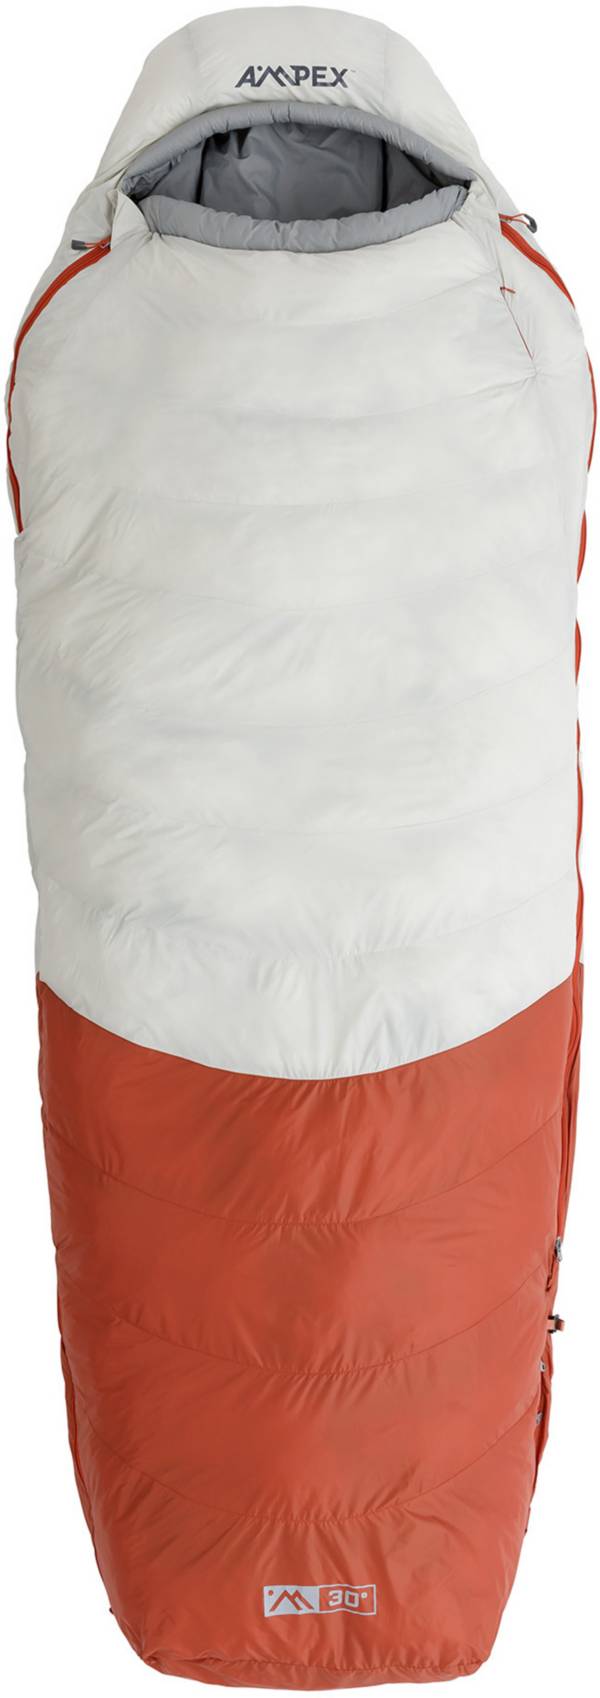 AMPEX Hybrid Sleeping Bag 30- Long Wide product image